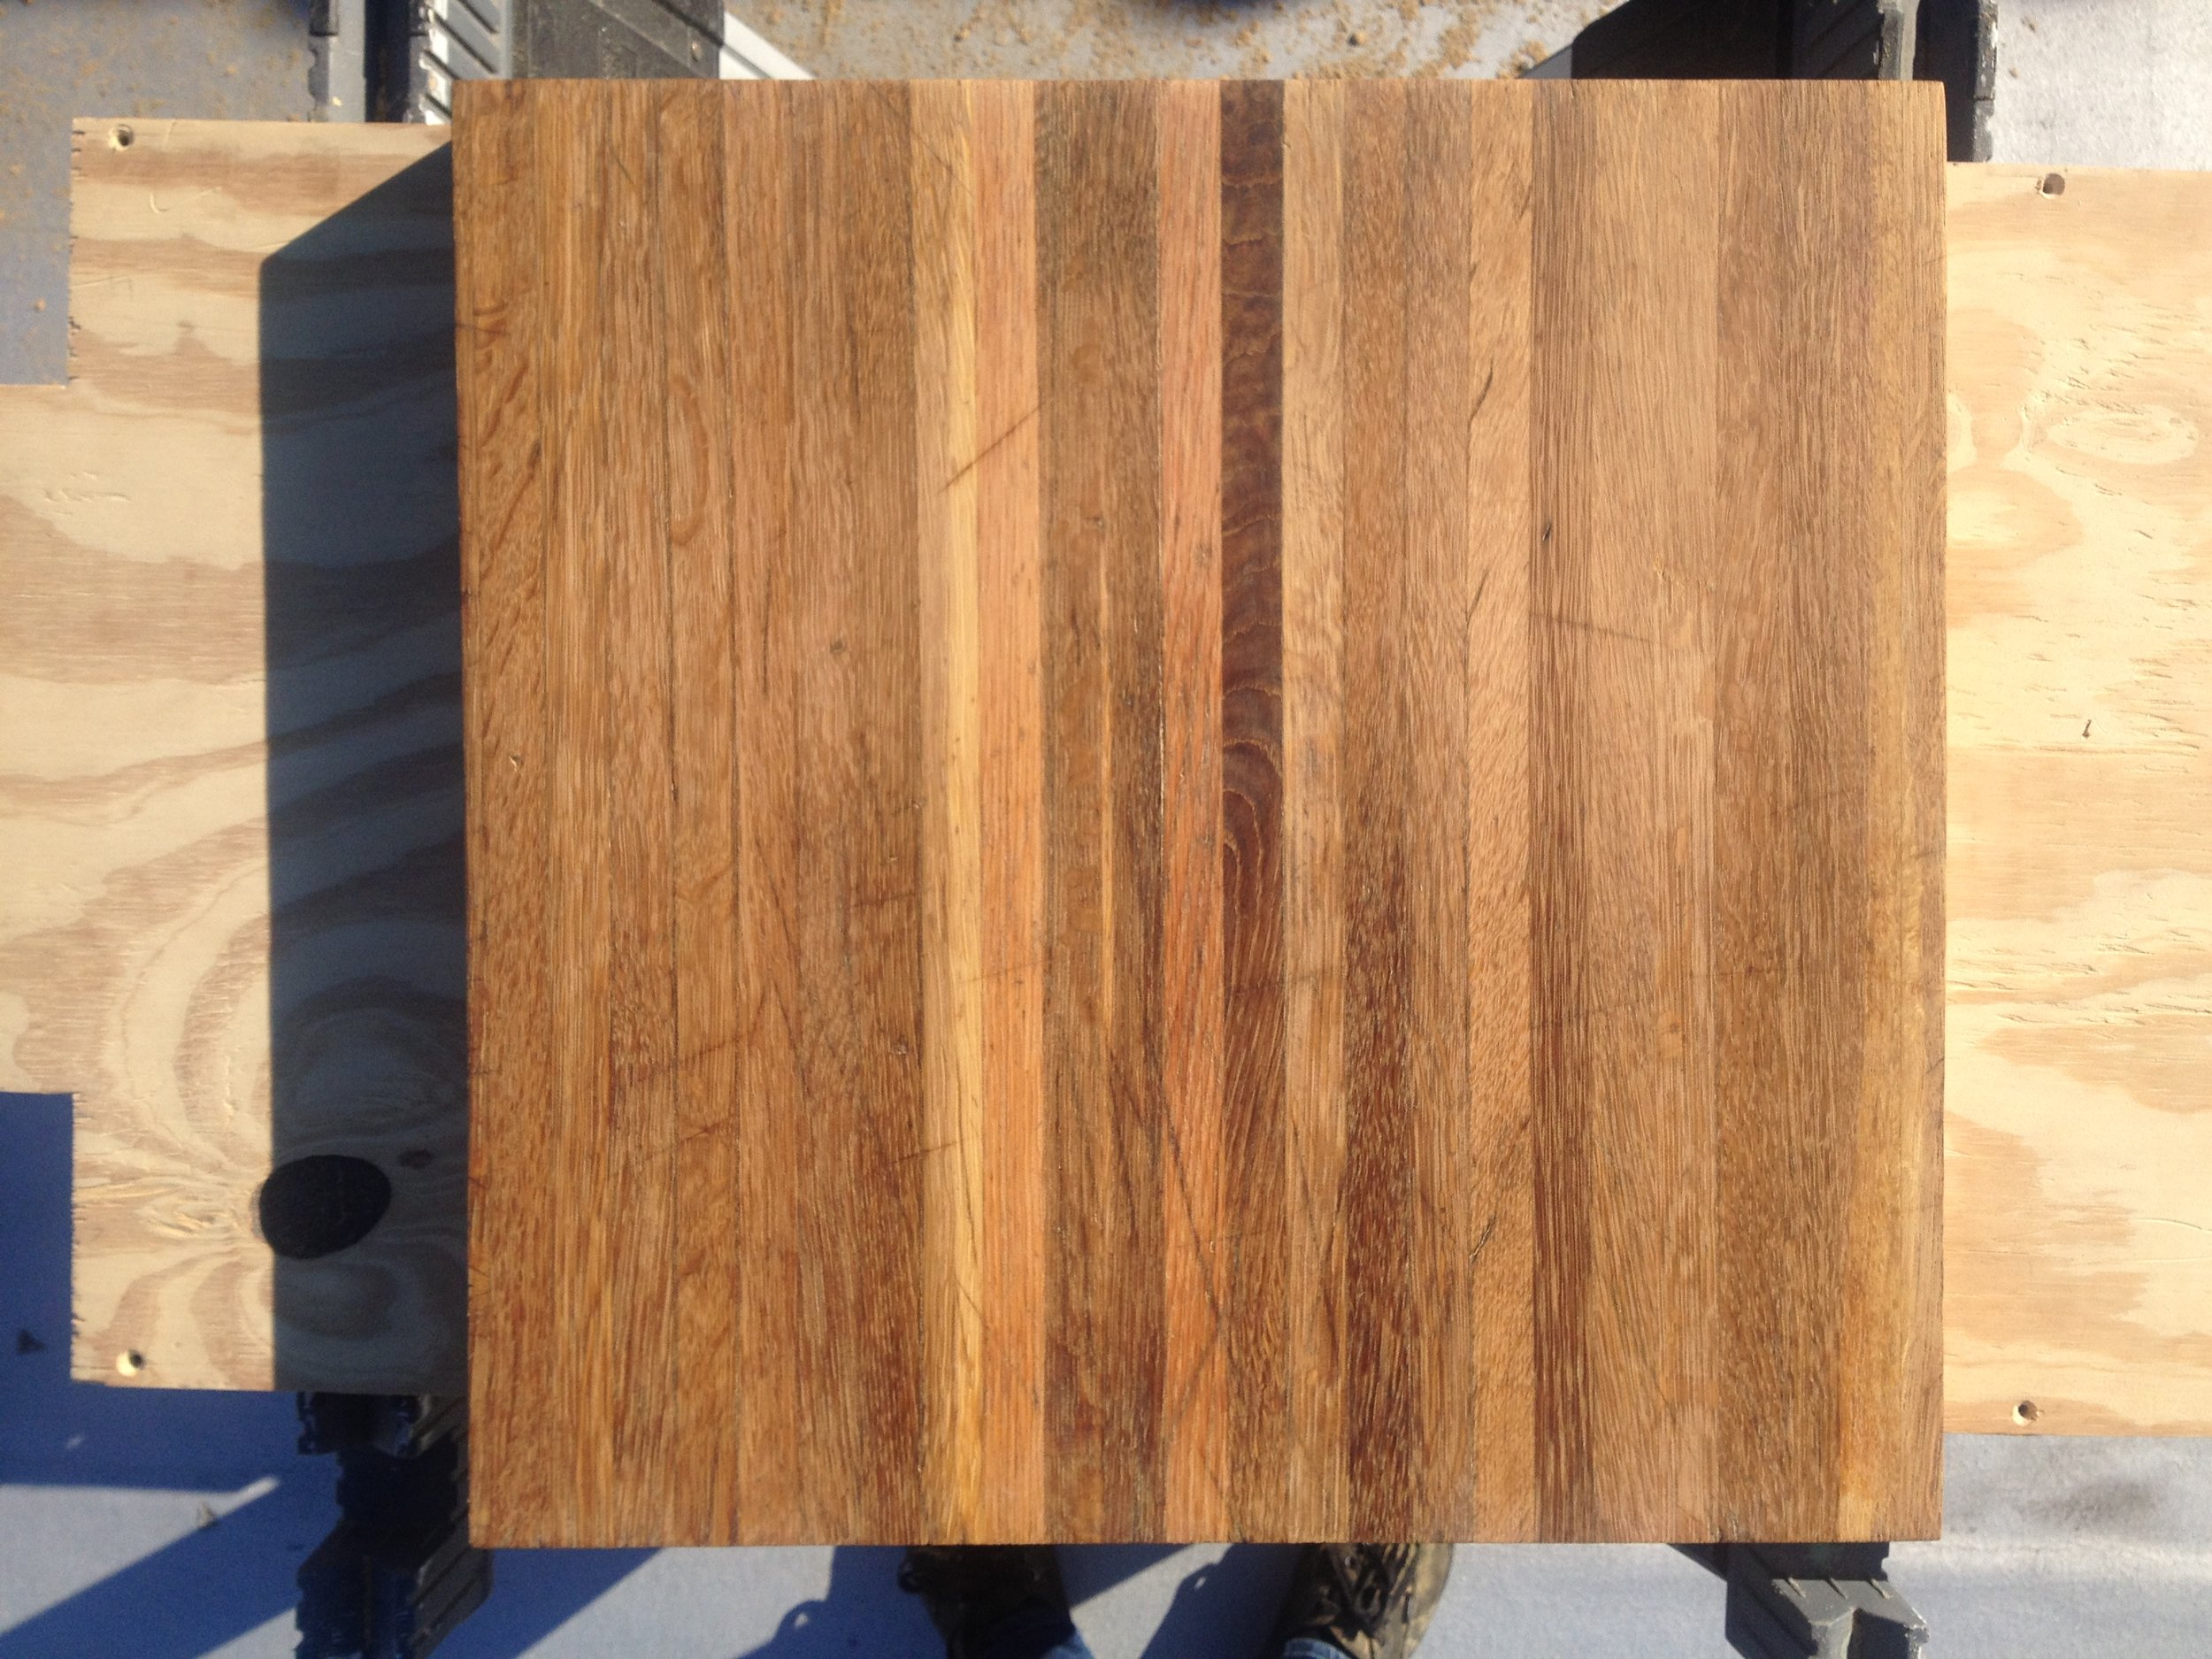 cutting-board-restoration-in-progress-8.jpg